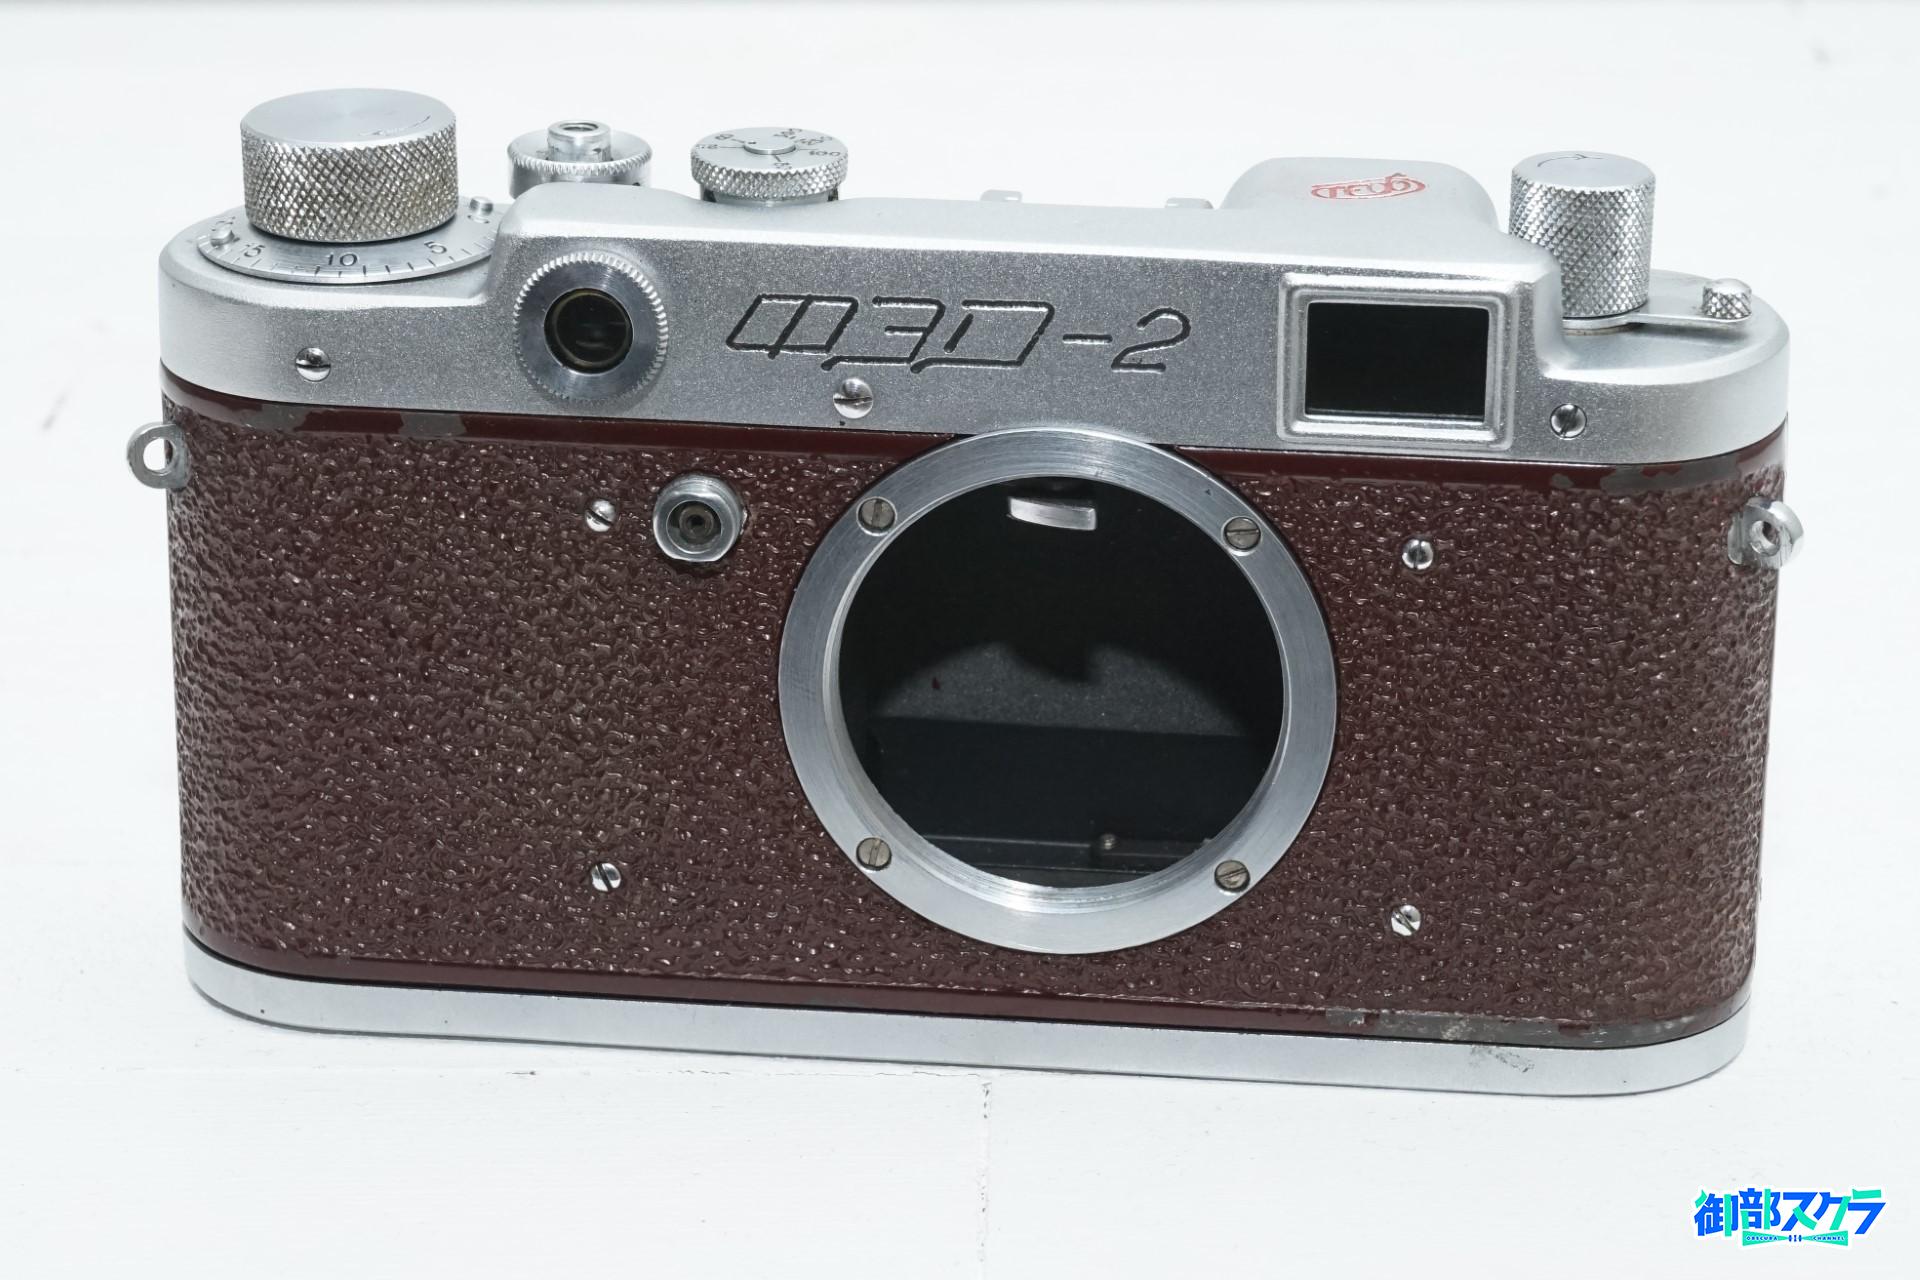 FED-2 旧ソ連製レンジファインダーカメラの特徴・Zorki-4との比較 – 御 ...